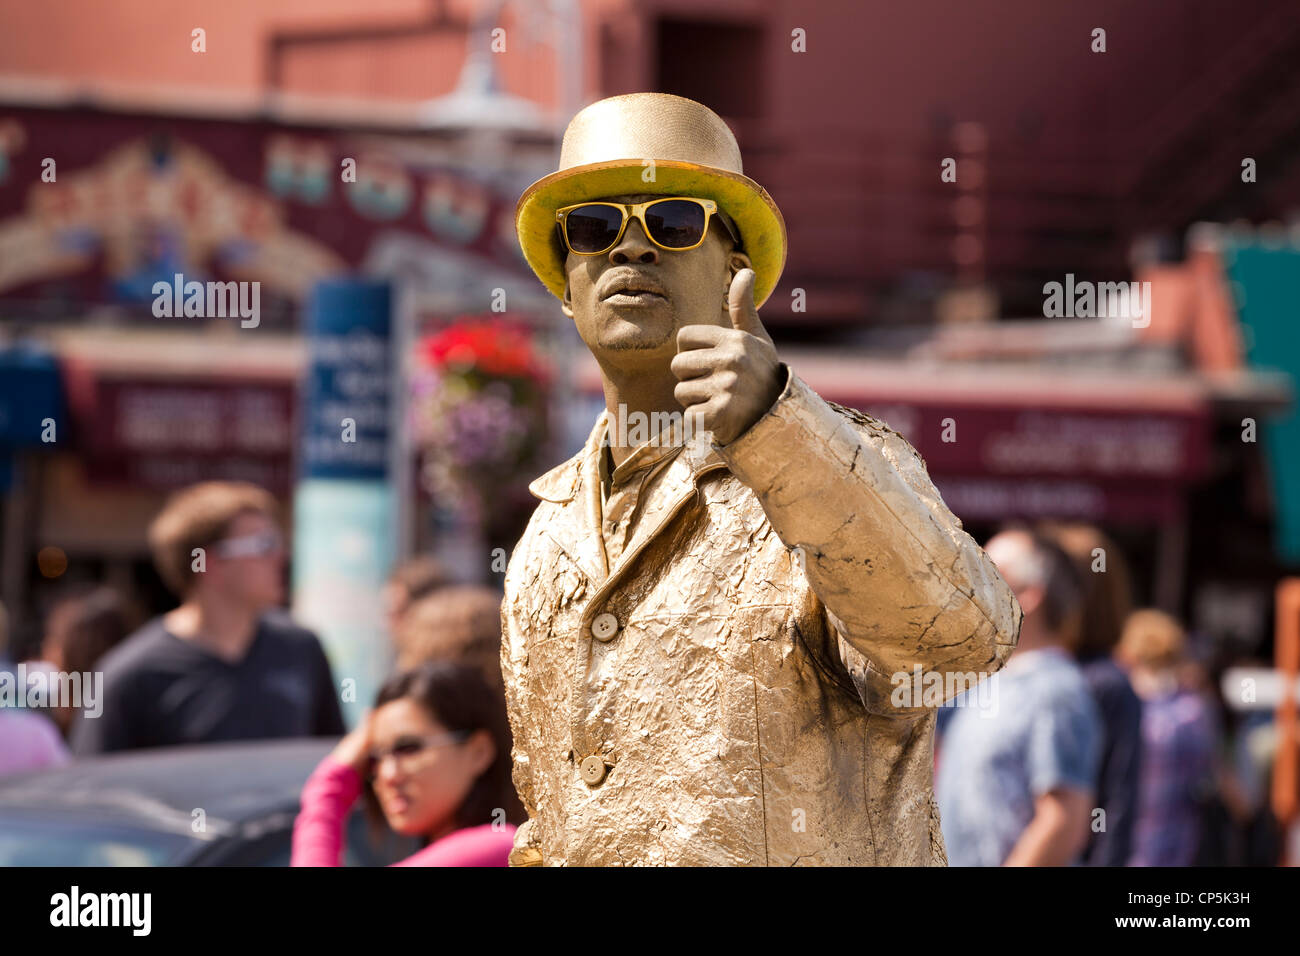 Oro Uomo street performer sulla trafficata strada - San Francisco, California USA Foto Stock